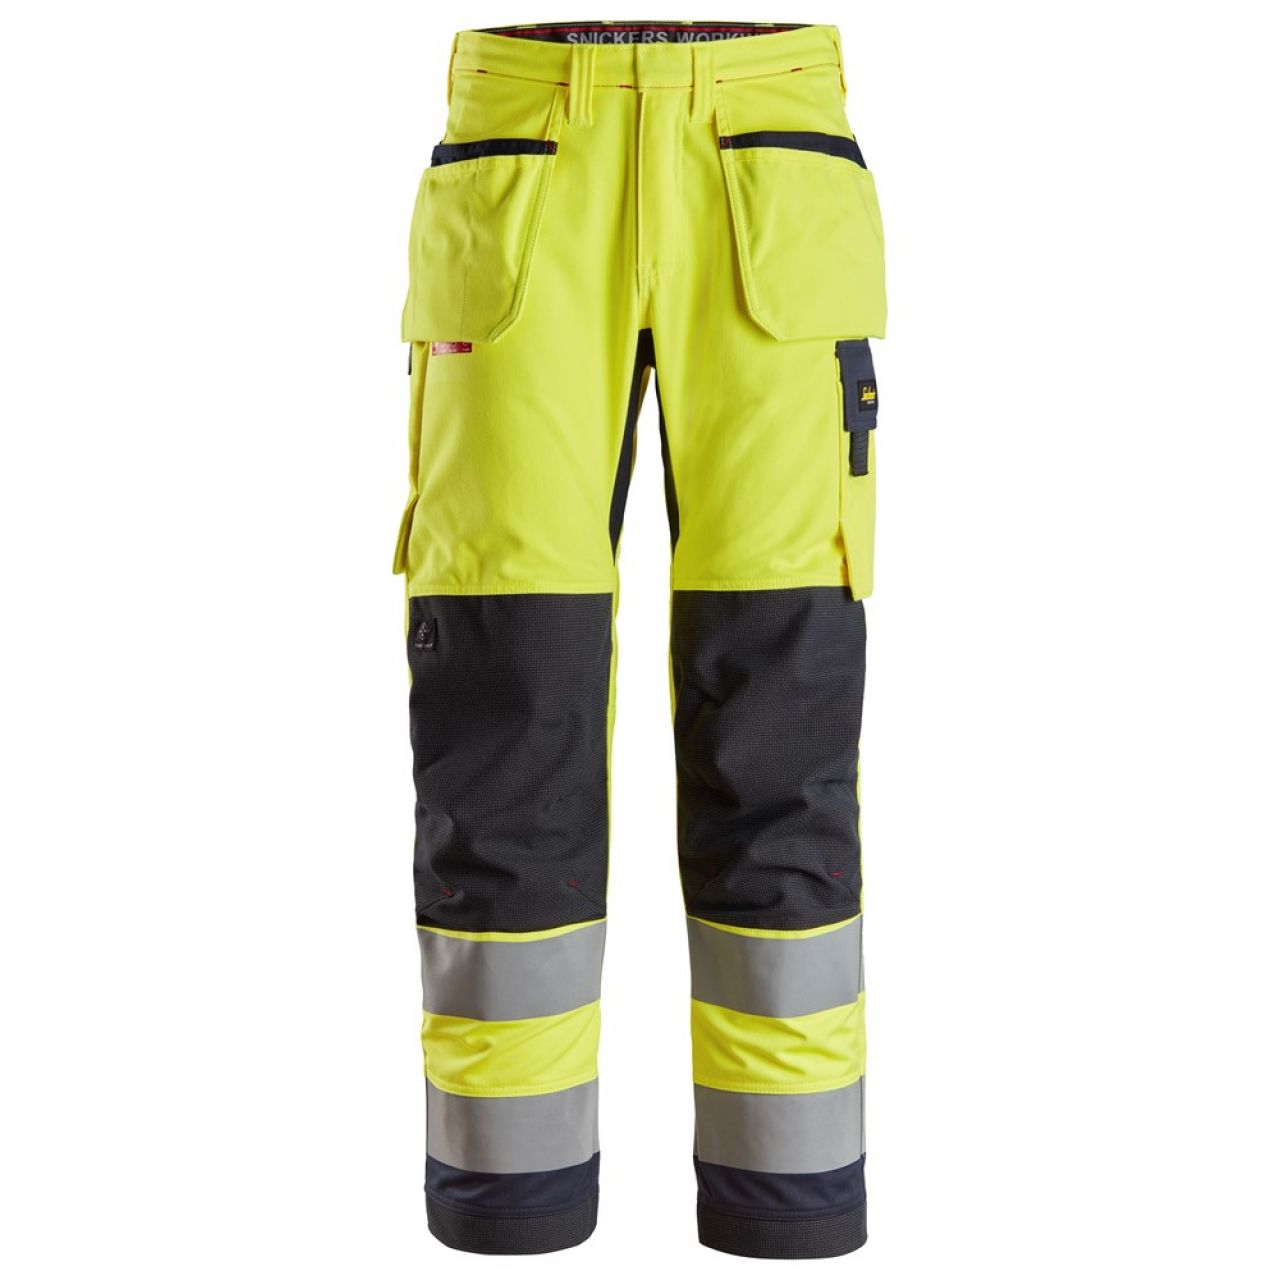 6260 Pantalones largos de trabajo de alta visibilidad clase 2 con bolsillos flotantes ProtecWork amarillo-azul marino talla 146